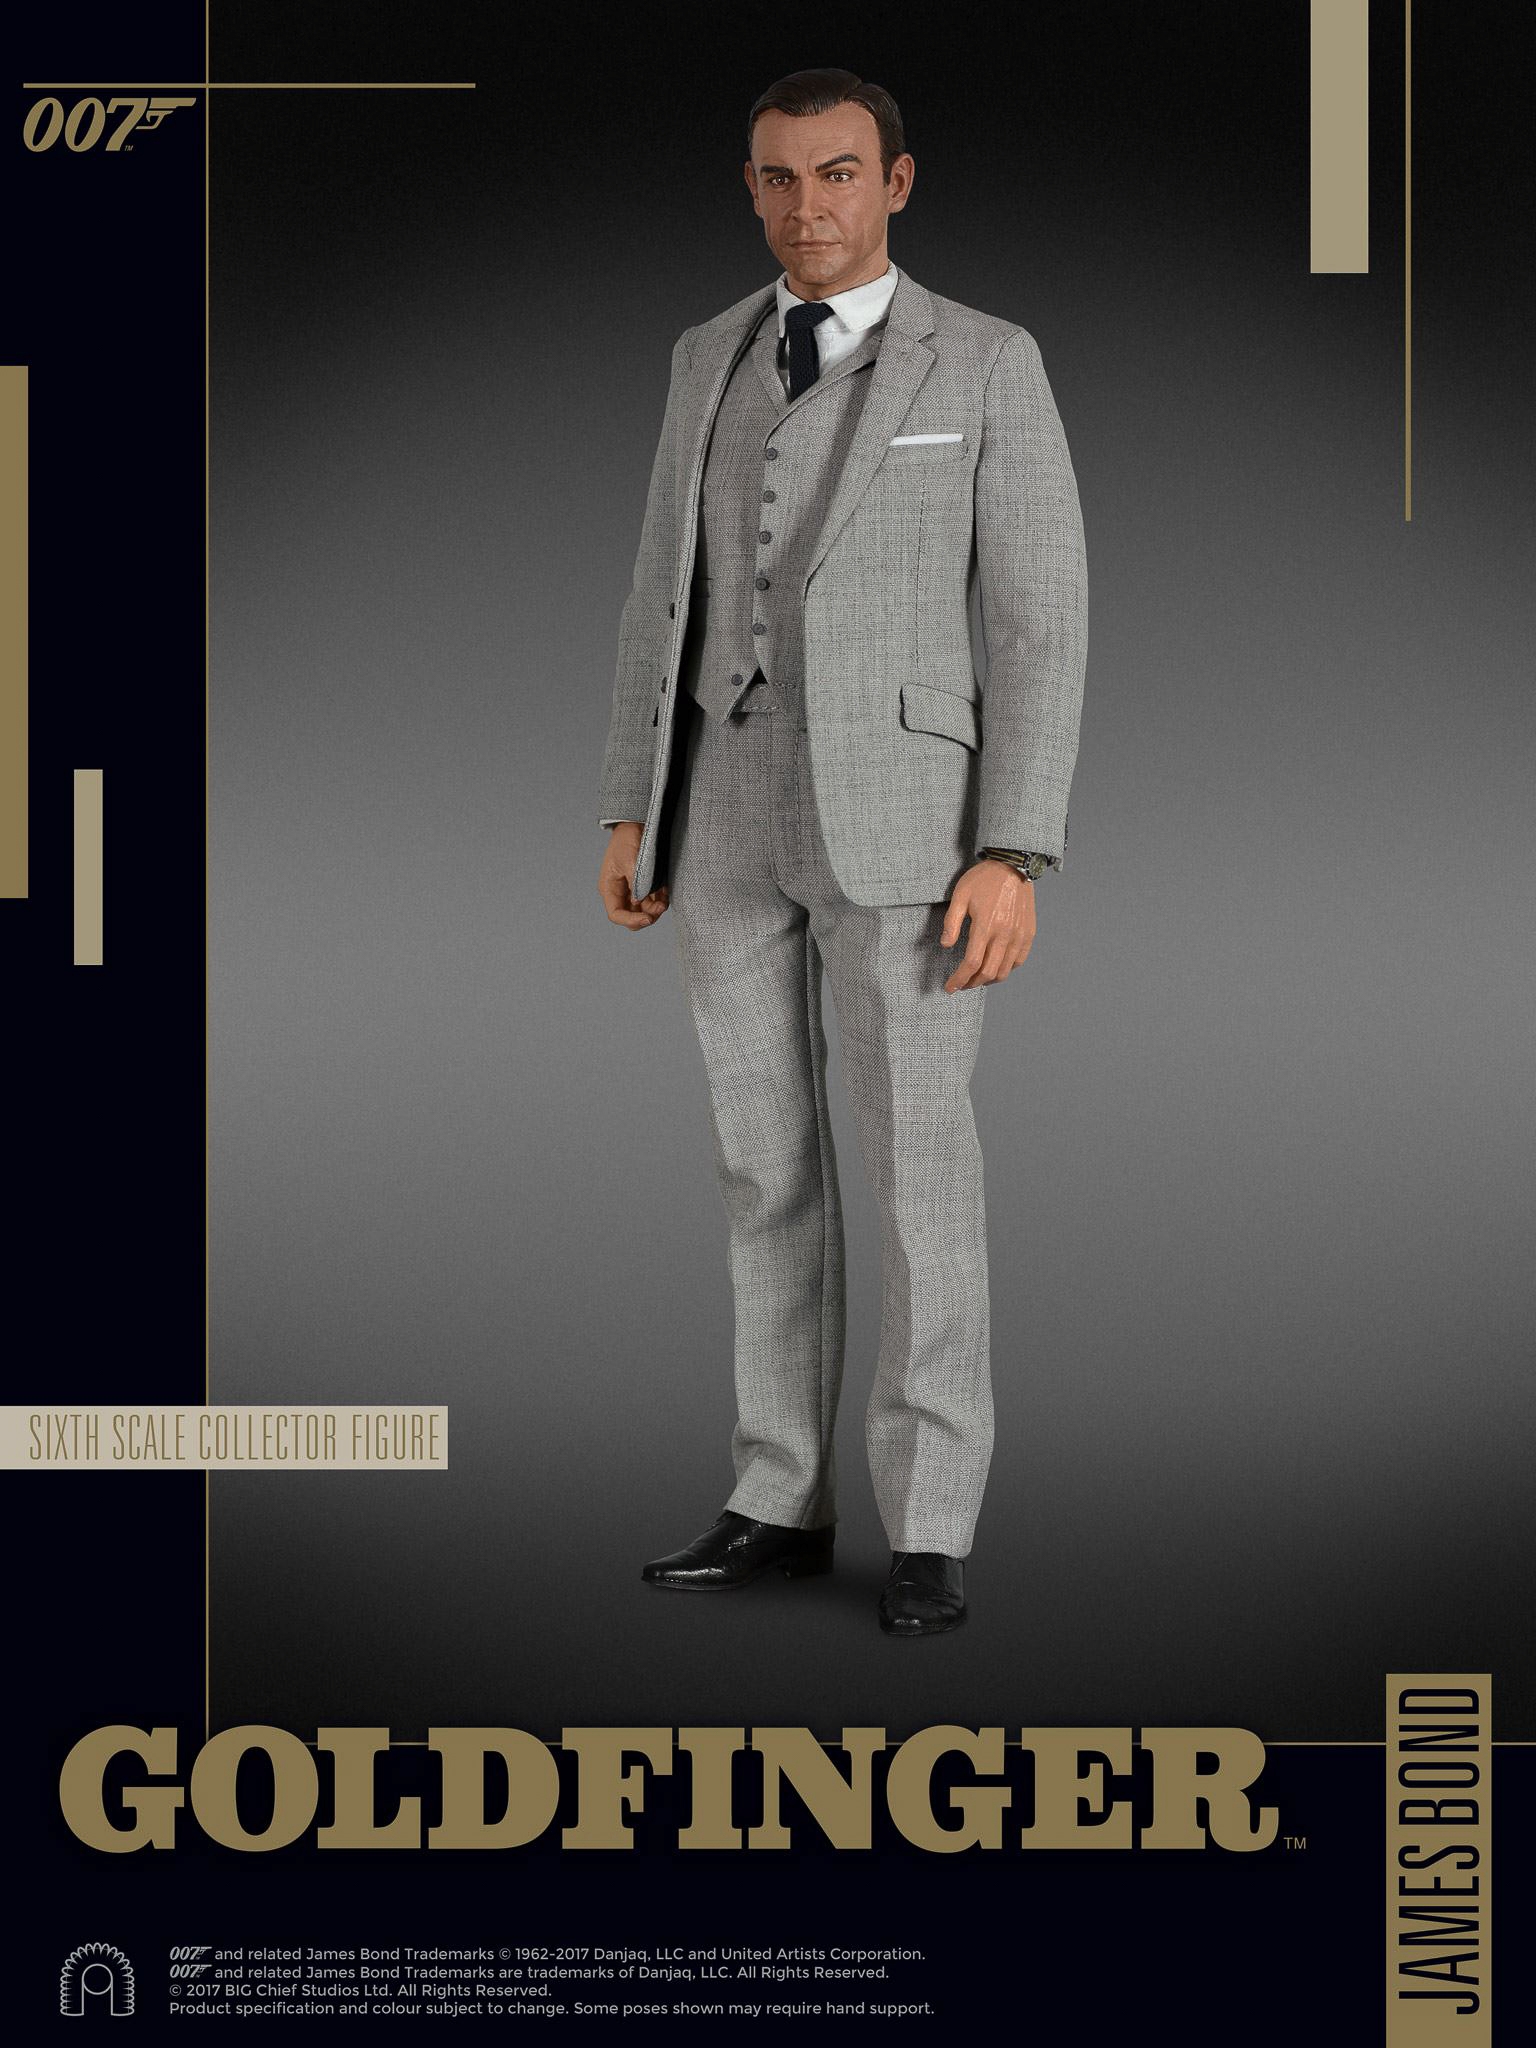 Big-Chief-James-Bond-Goldfinger-Oddjob-Full-Reveal-001.jpg